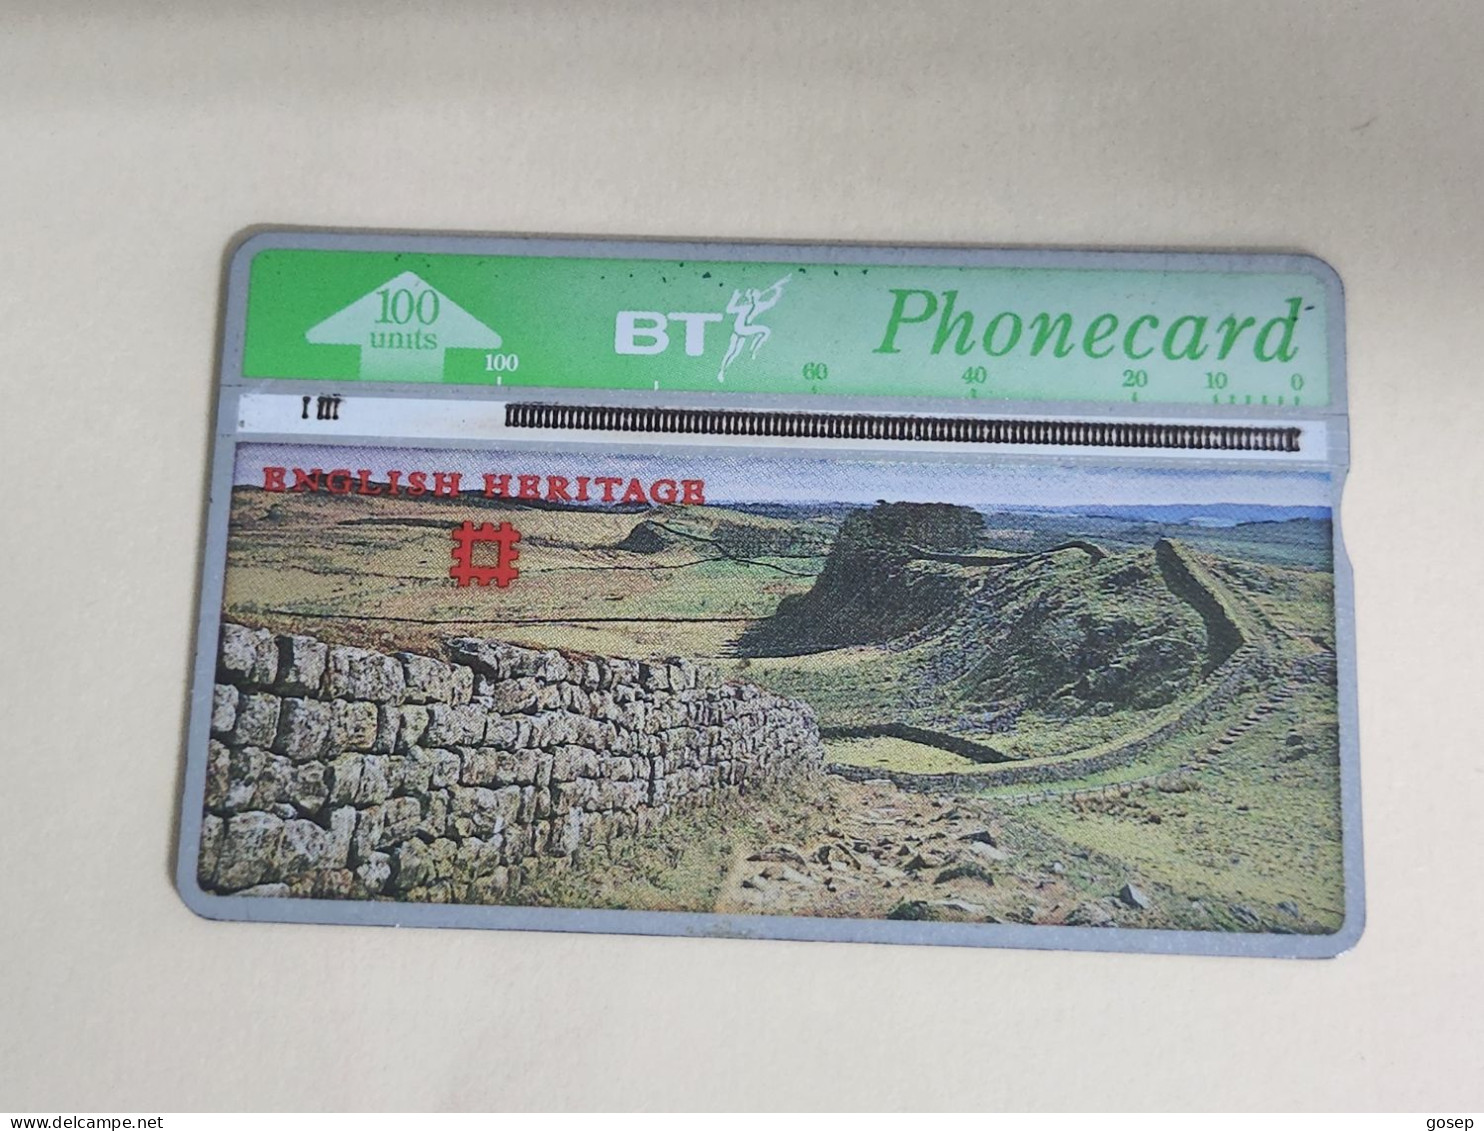 United Kingdom-(BTA117)-HERITAGE-Hadrian's Wall-(205)(100units)(527H78906)price Cataloge3.00£-used+1card Prepiad Free - BT Advertising Issues